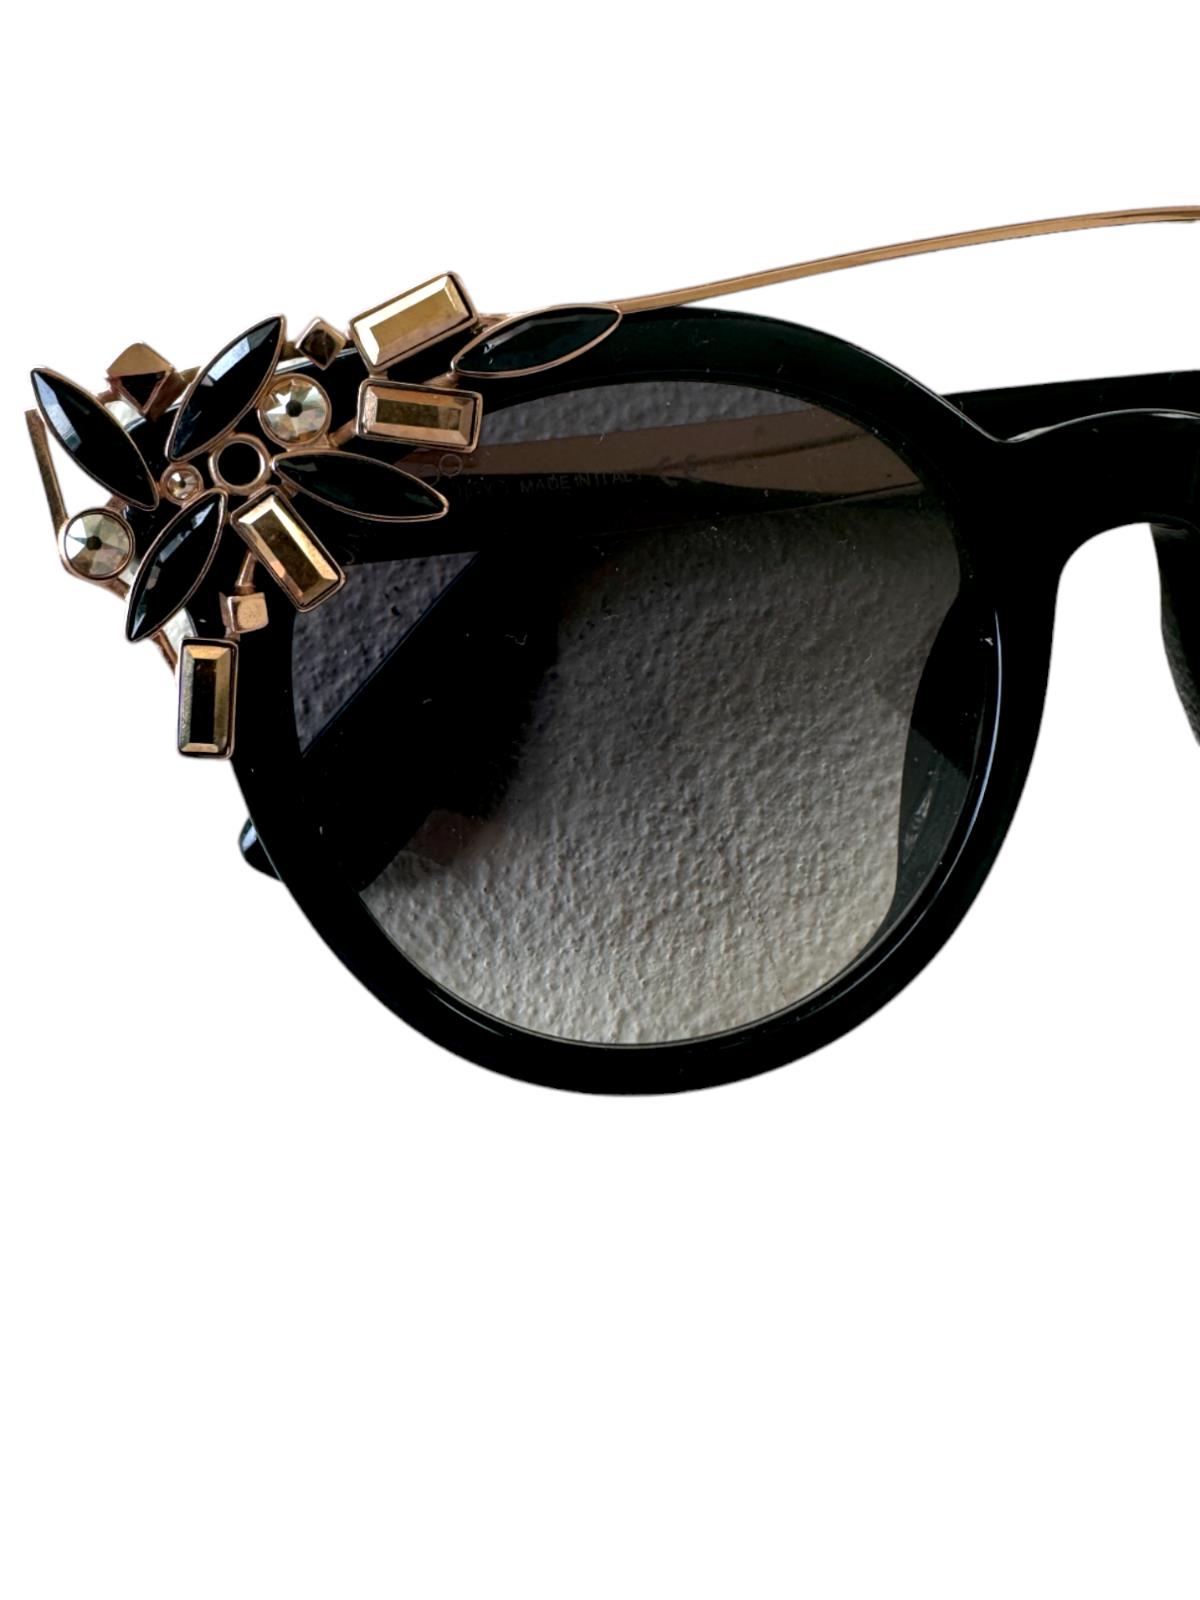 JIMMY CHOO Black/Gold VIVY Crystals Embellished Round Sunglasses, 2016 - RARE!